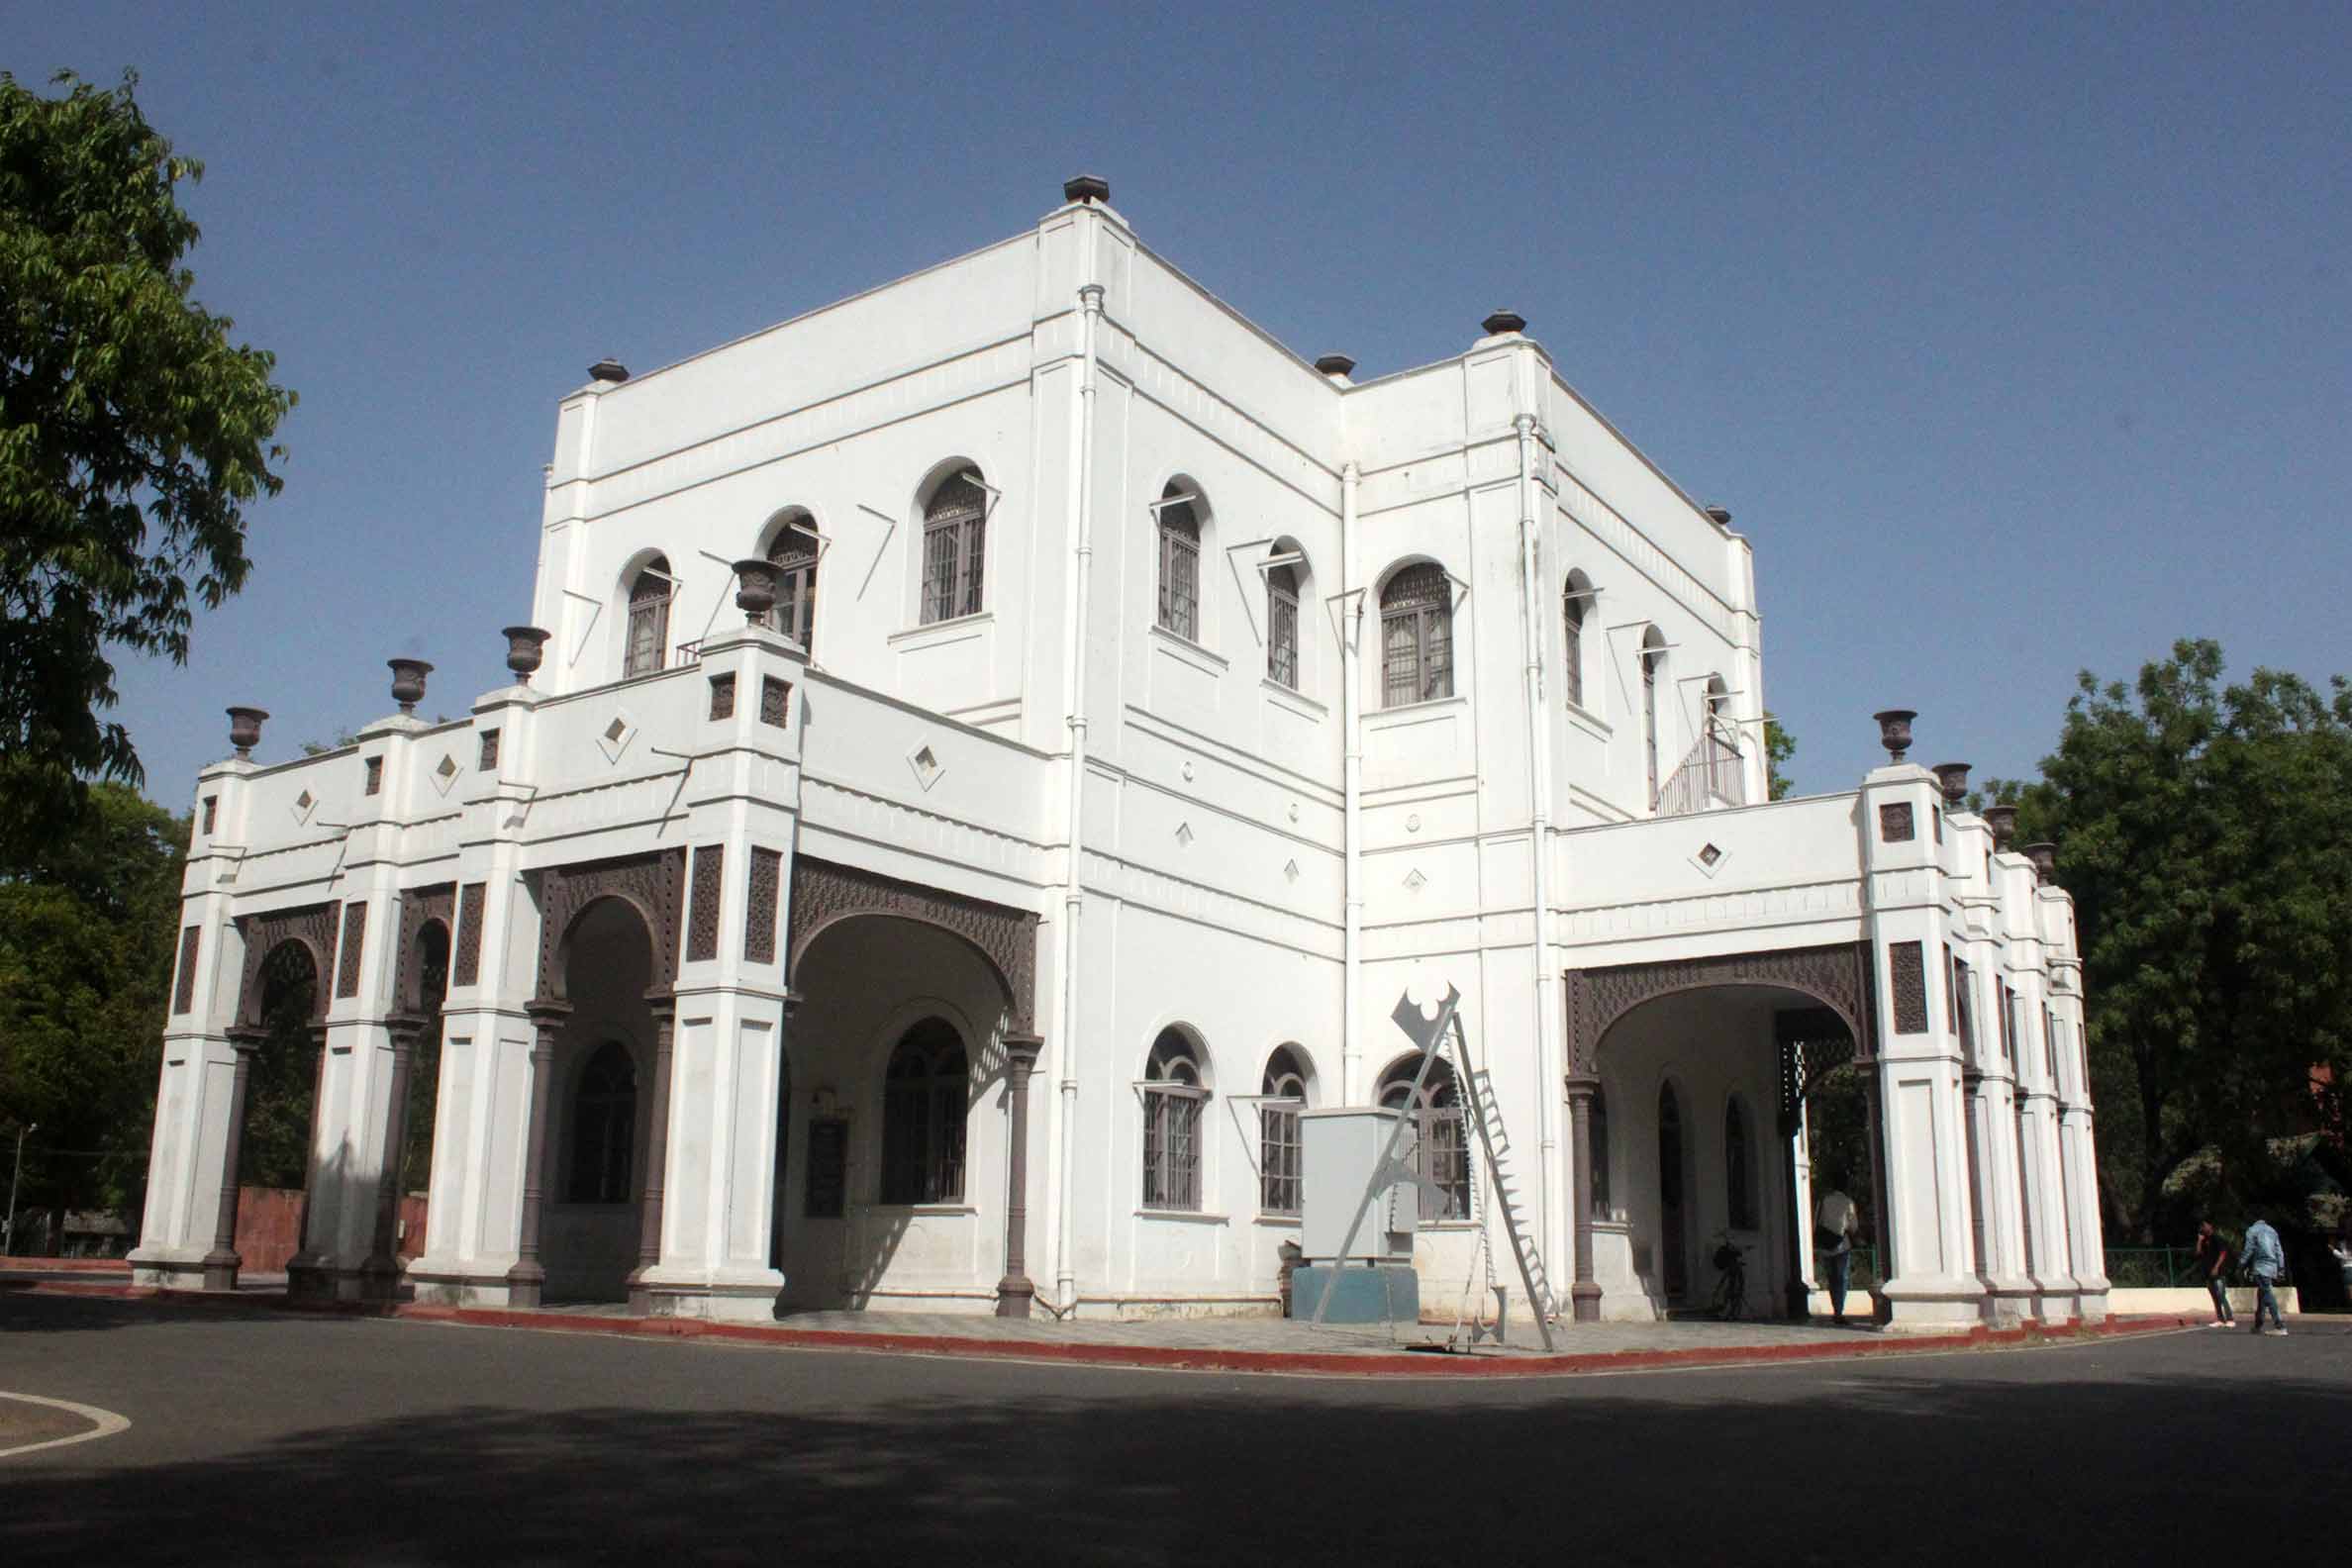 The Baroda Health Museum is housed within a heritage pavilion built in 1878/79 for Maharaja Sayajirao Gaekwad III